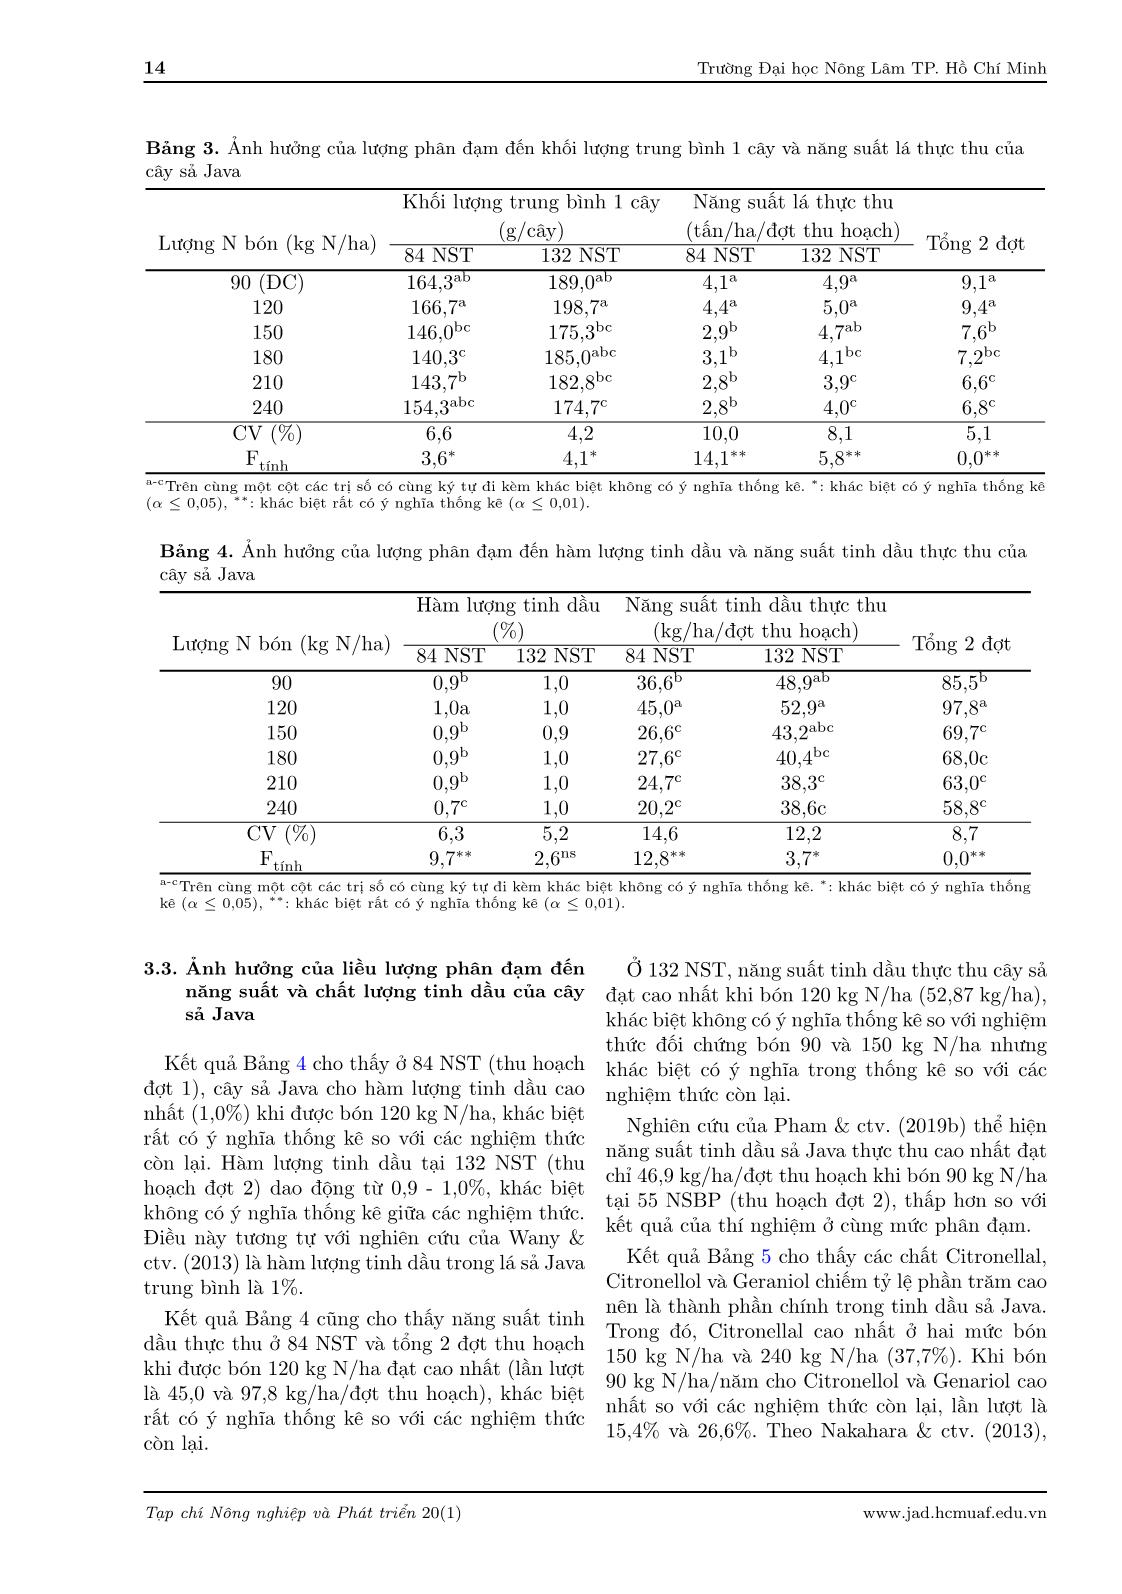 Effect of nitrogen fertilizer rates on growth and oil yield of Java lemongrass (Cymbopogon winterianus Jawitt) in Thu Duc, Ho Chi Minh City trang 5